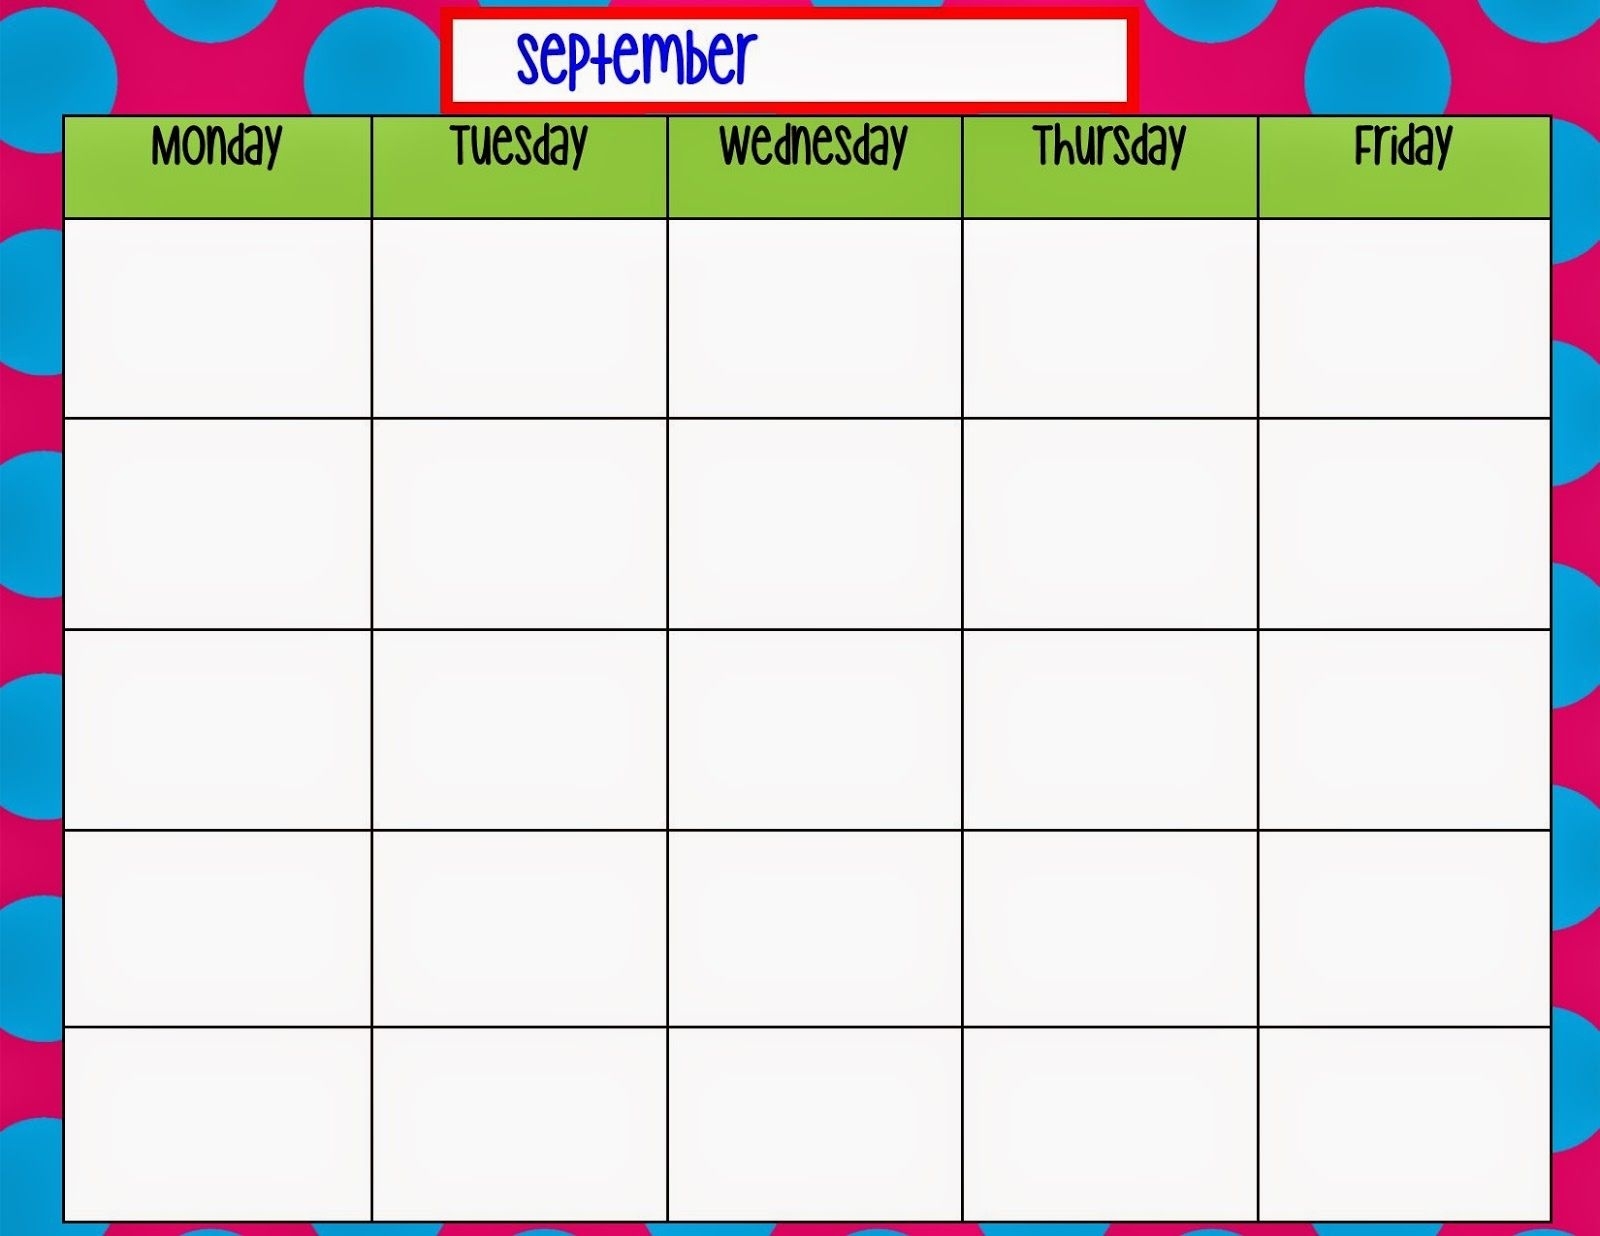 Monday Through Friday Calendar Template | Preschool | Pinterest  Free Monday Through Friday Calendar Template